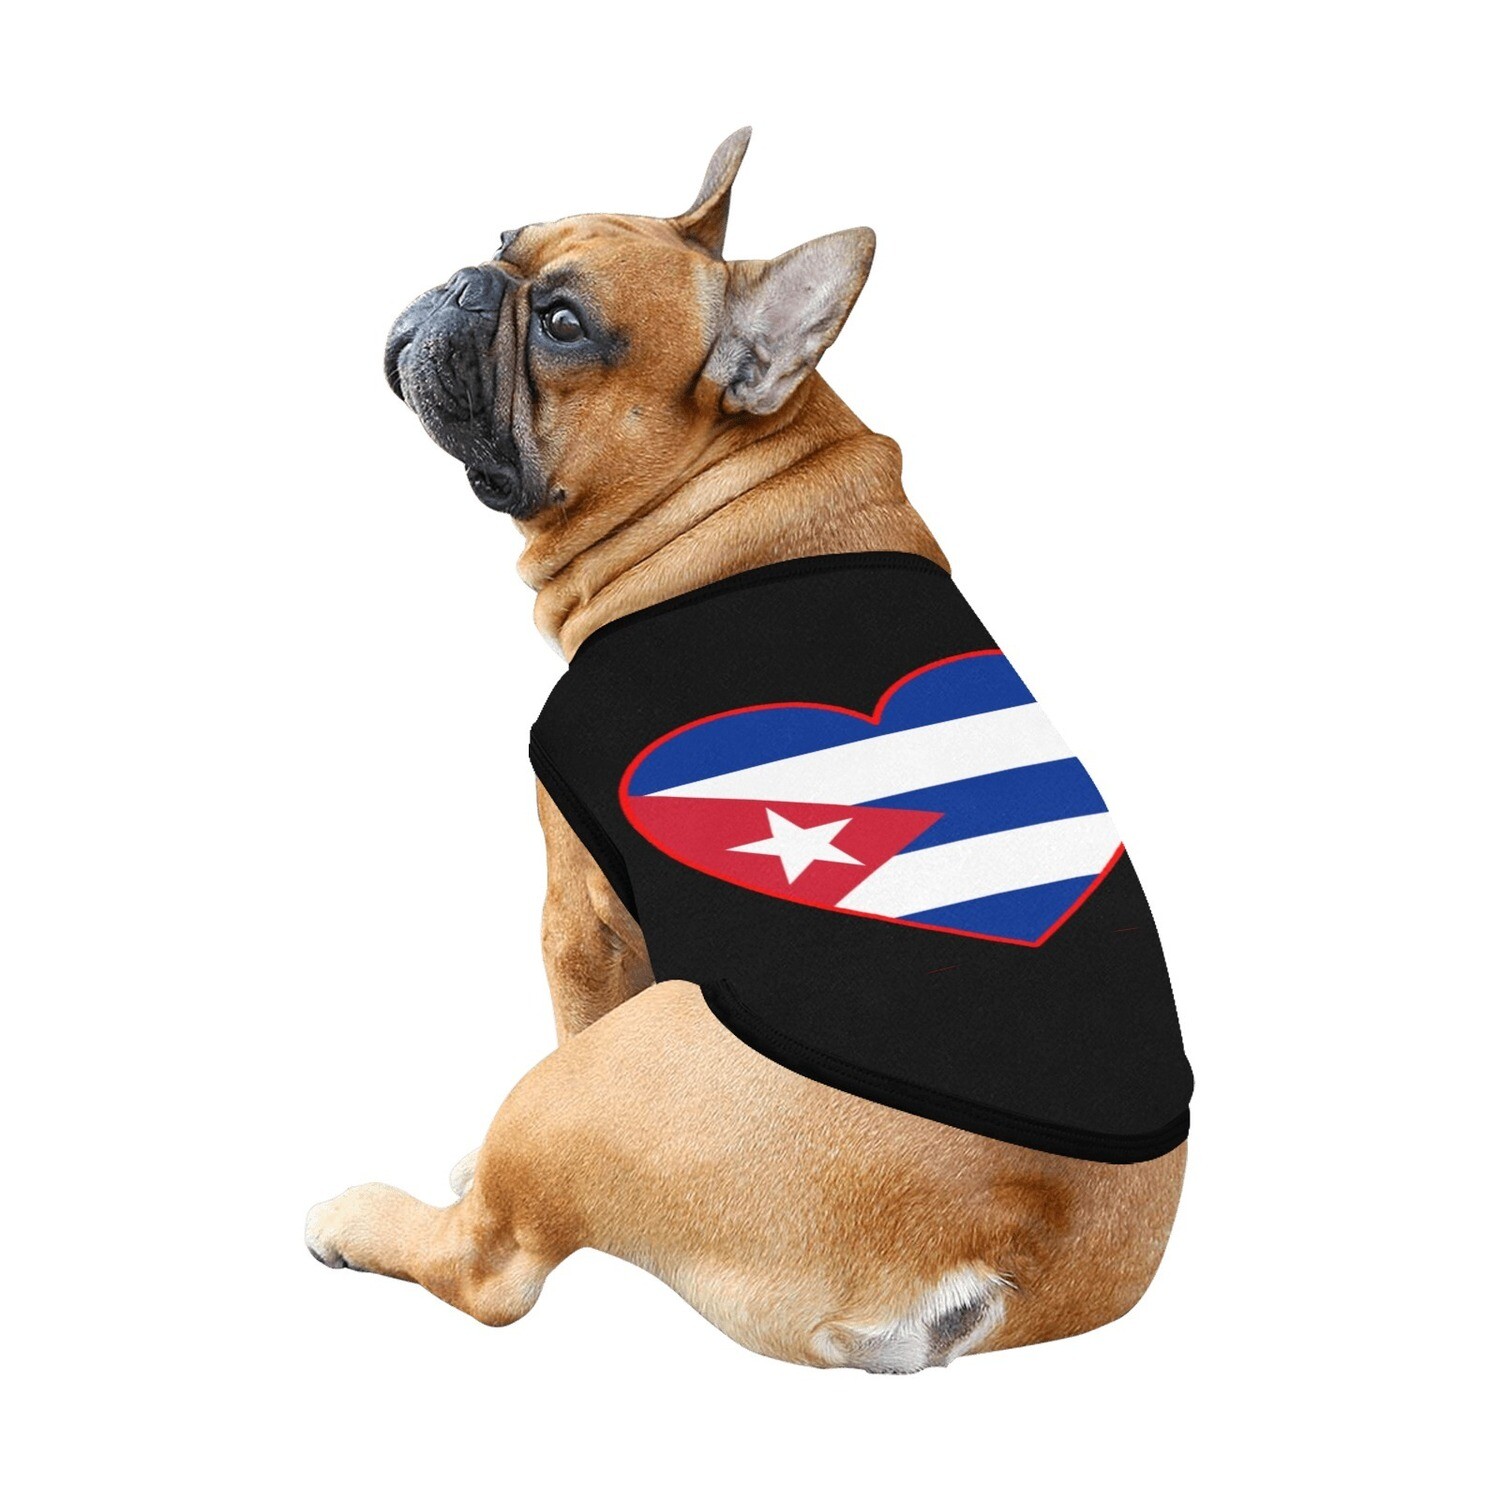 🐕🇨🇺 I love Cuba dog t-shirt, dog gift, dog tank top, dog shirt, dog clothes, gift, 7 sizes XS to 3XL, Cuban flag, heart, black